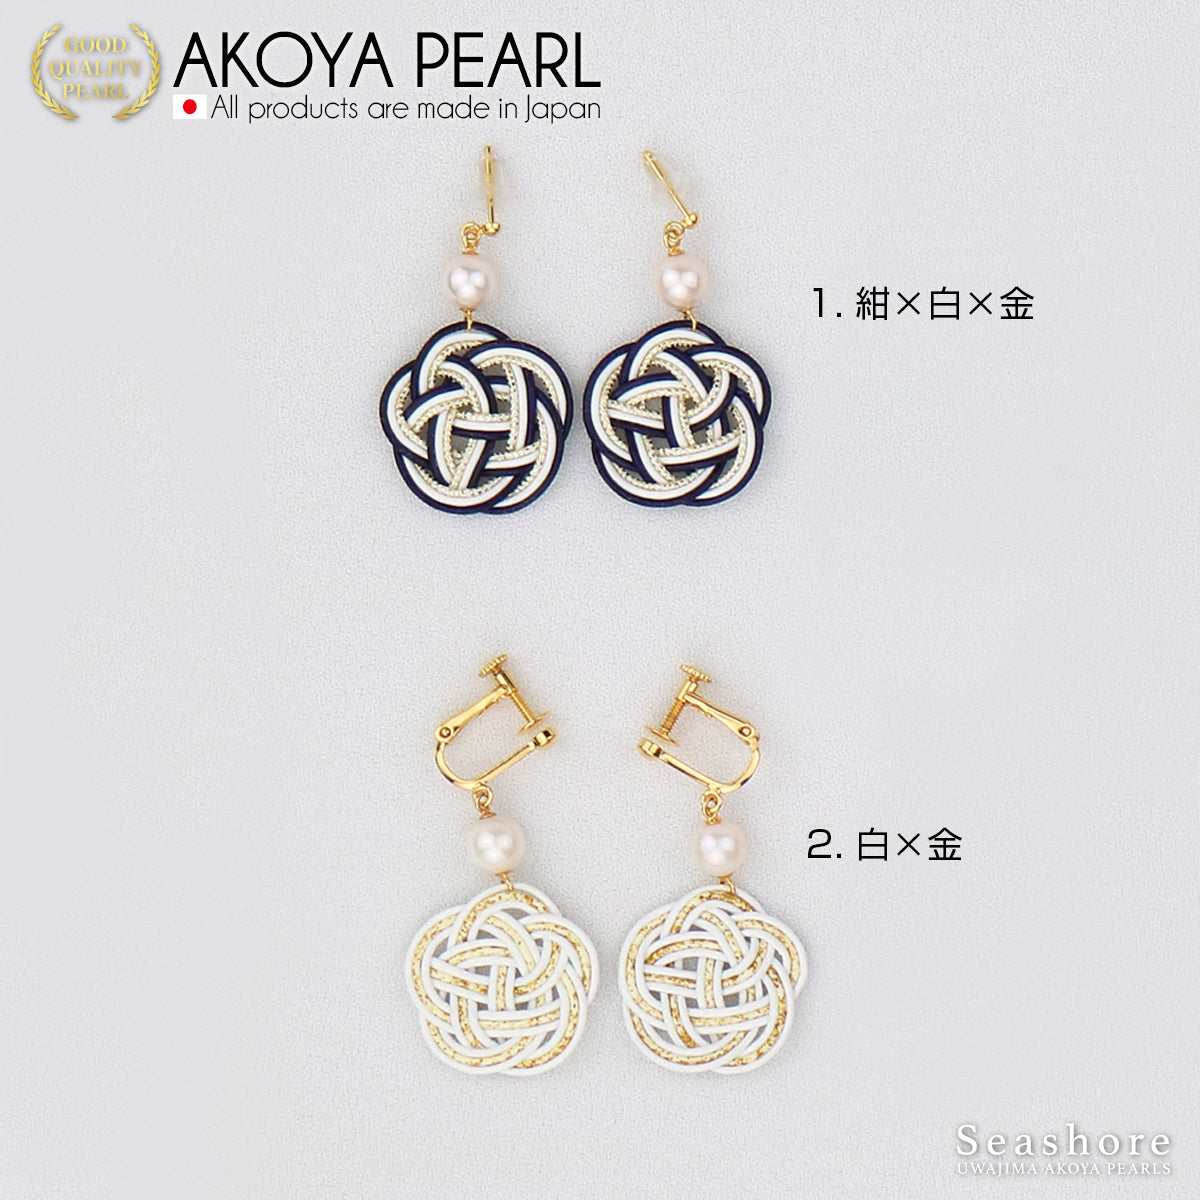 Pearl Mizuhiki Earrings / Earrings SV925 Gold Plated 2 Colors [6.5-7.0mm] Akoya Pearl